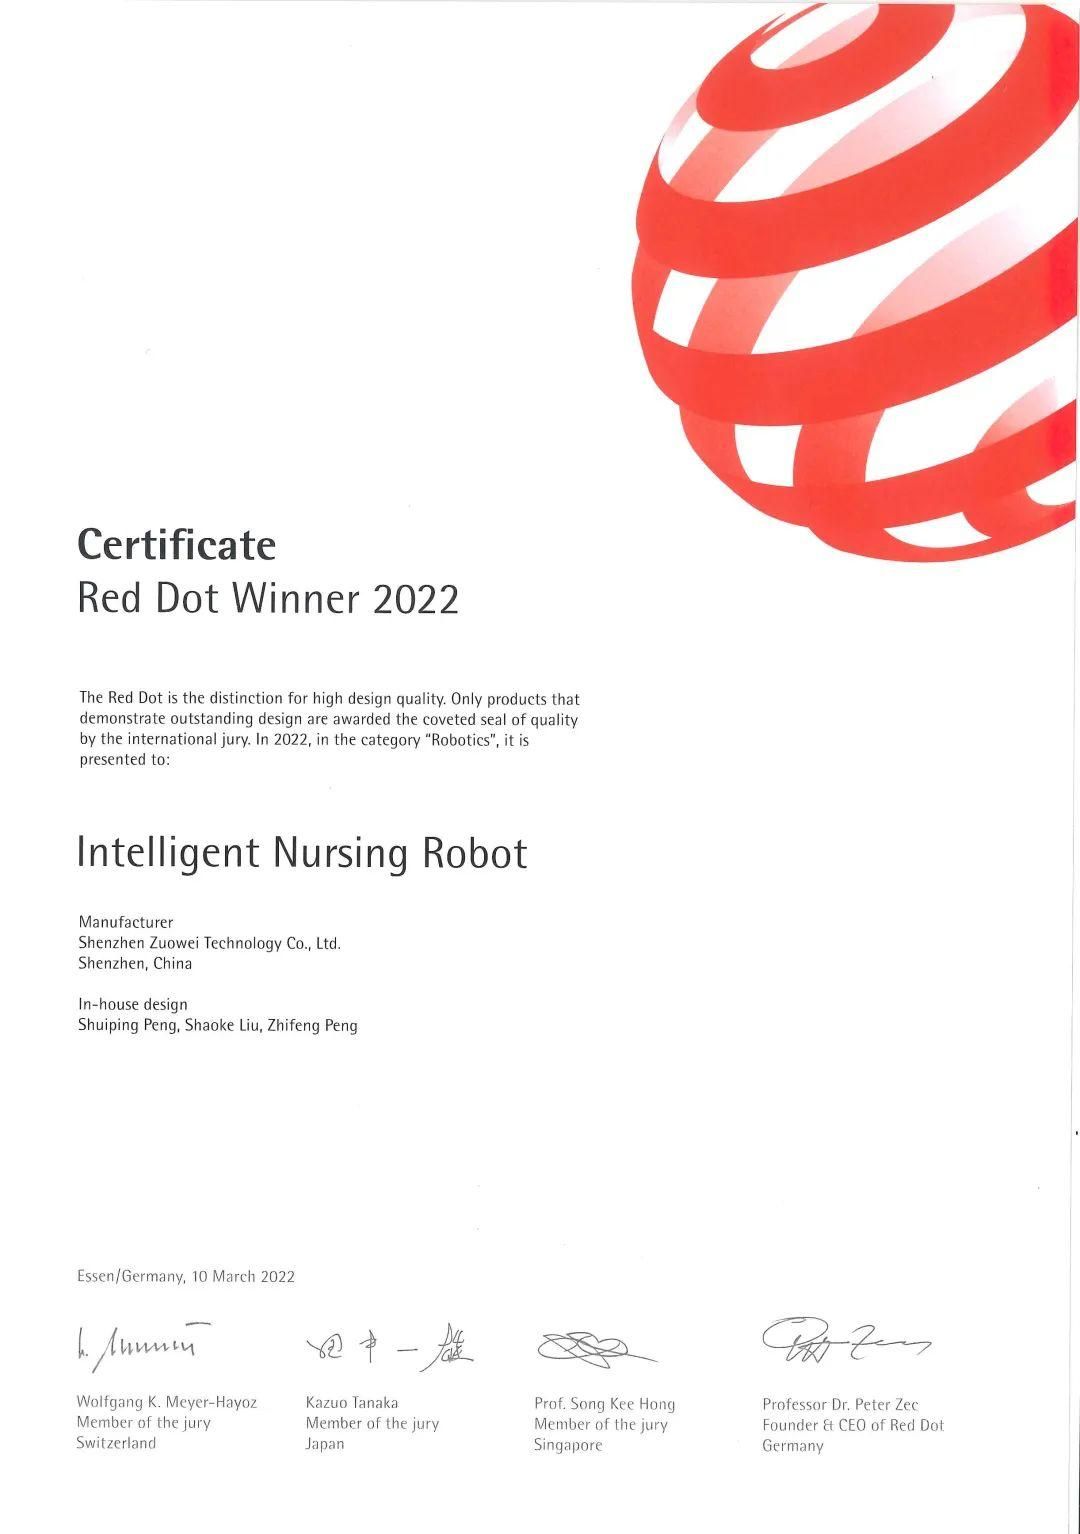 Certificate Red Dot Winner 2022 of ZW279Pro Intelligent Nuring Robot.